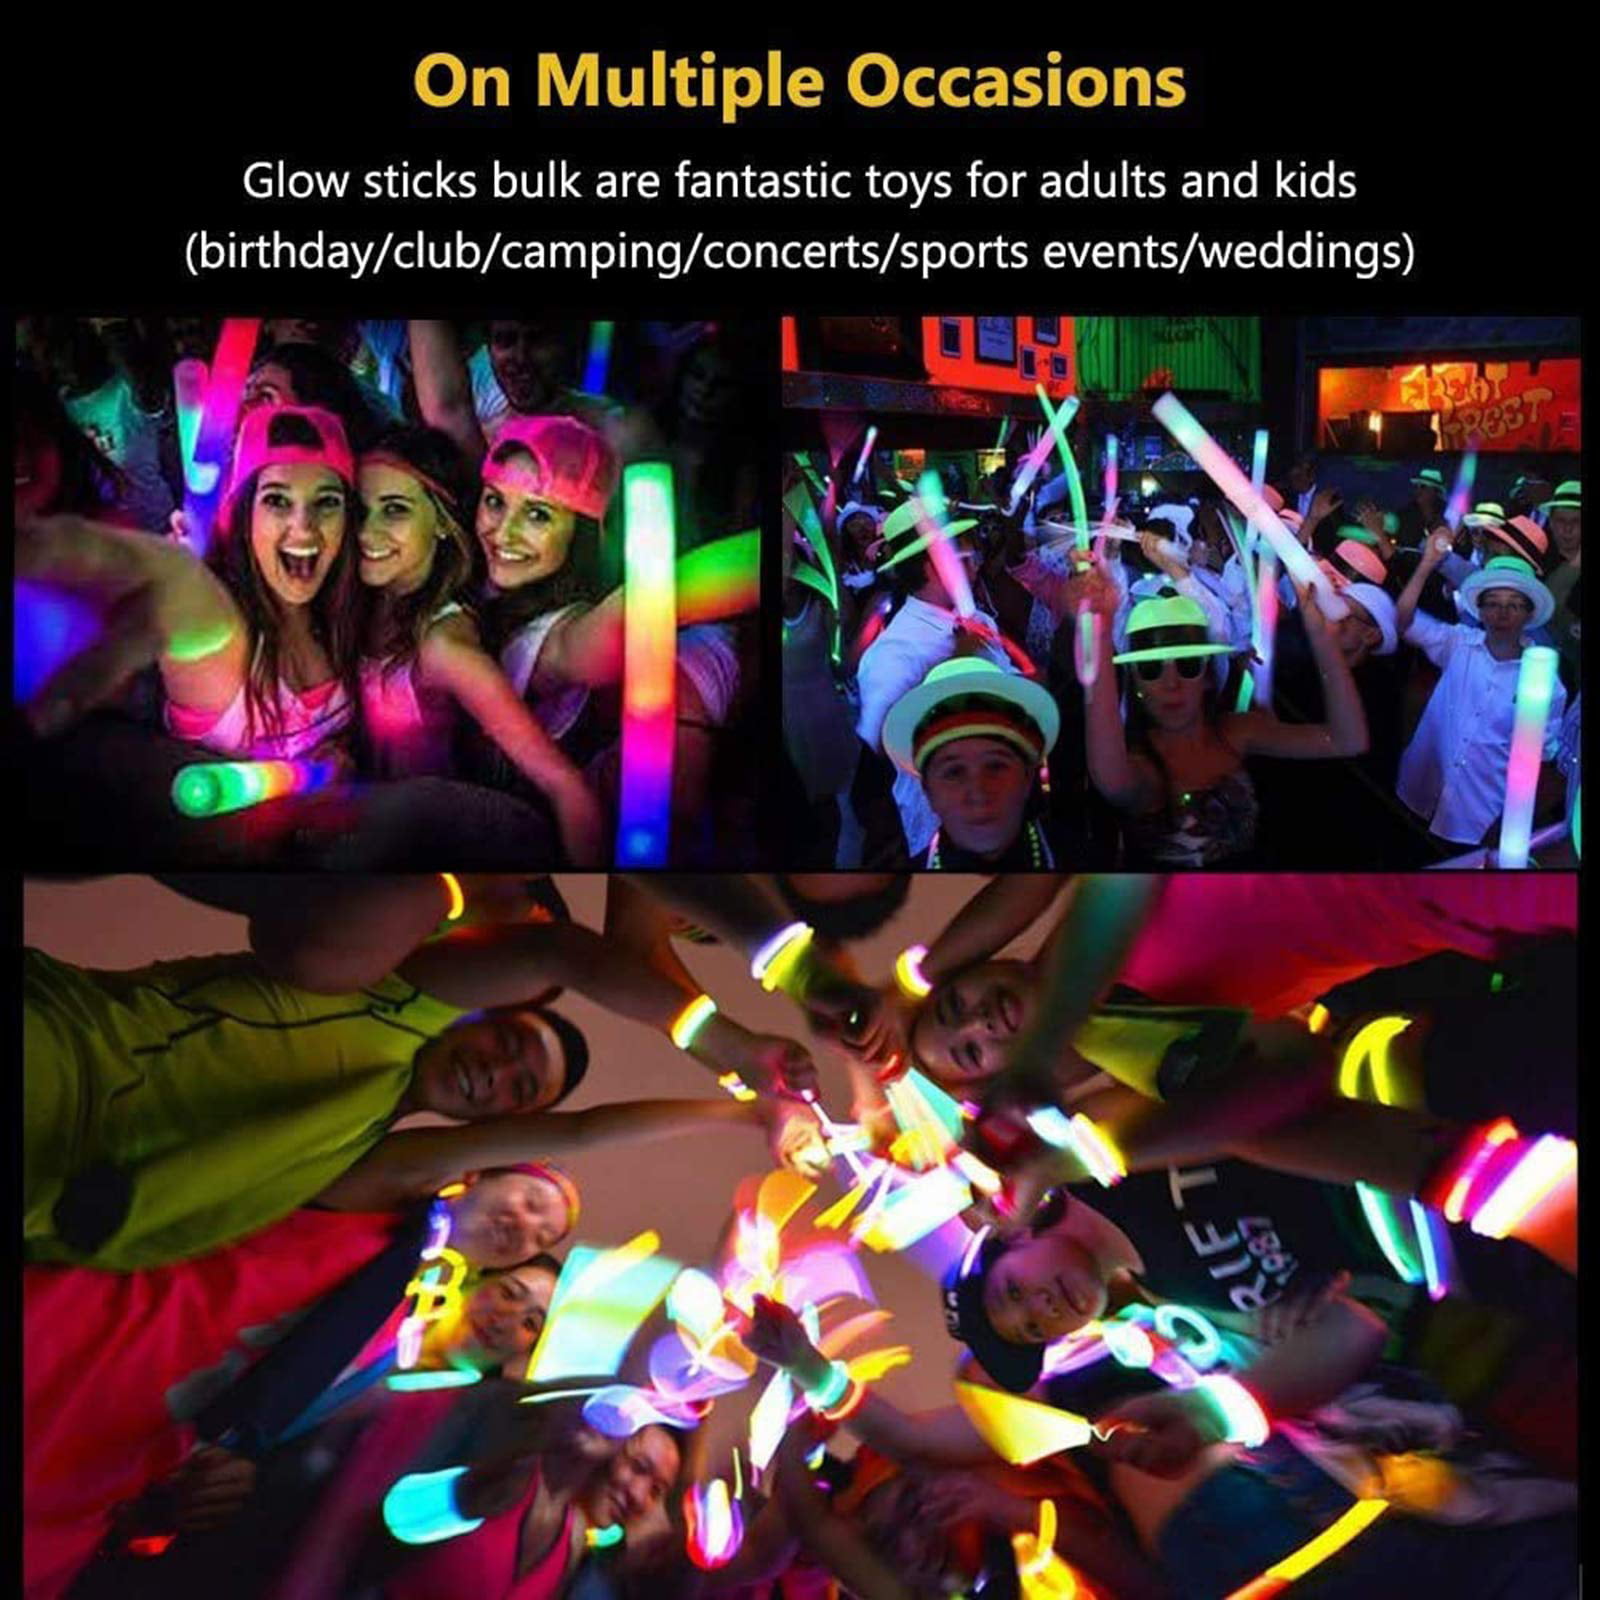 Gazdag 20 Pcs Foam Glow Sticks BULK,3 Modes Flashing LED Light Sticks Glow in The Dark Party Supplies Light Up Toys for Parties,Weddings,Concerts